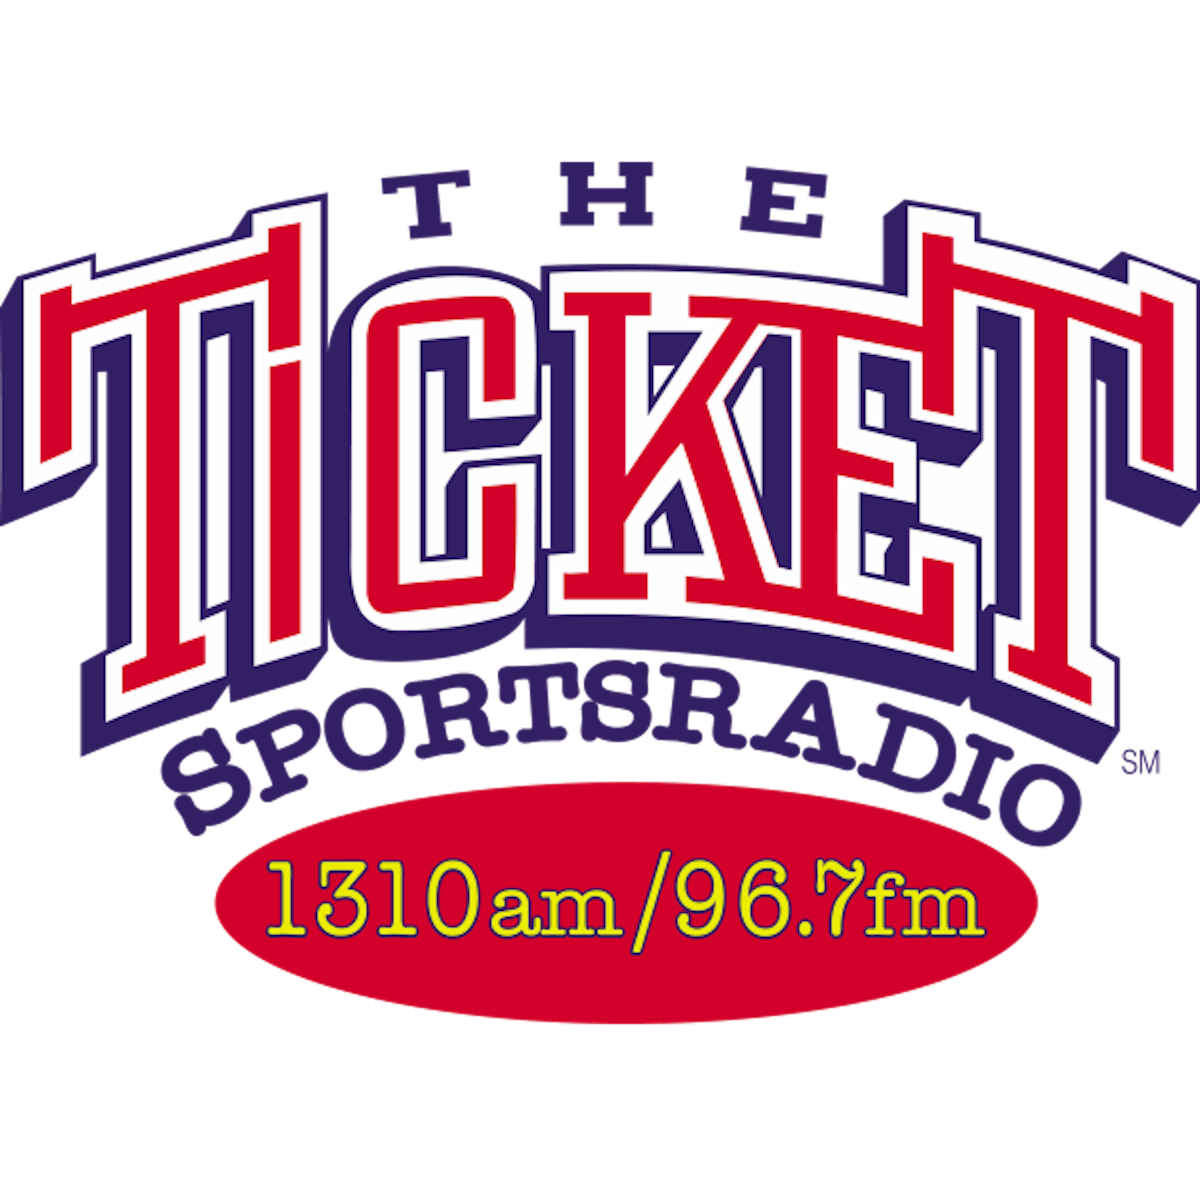 The Ticket Sports Radio